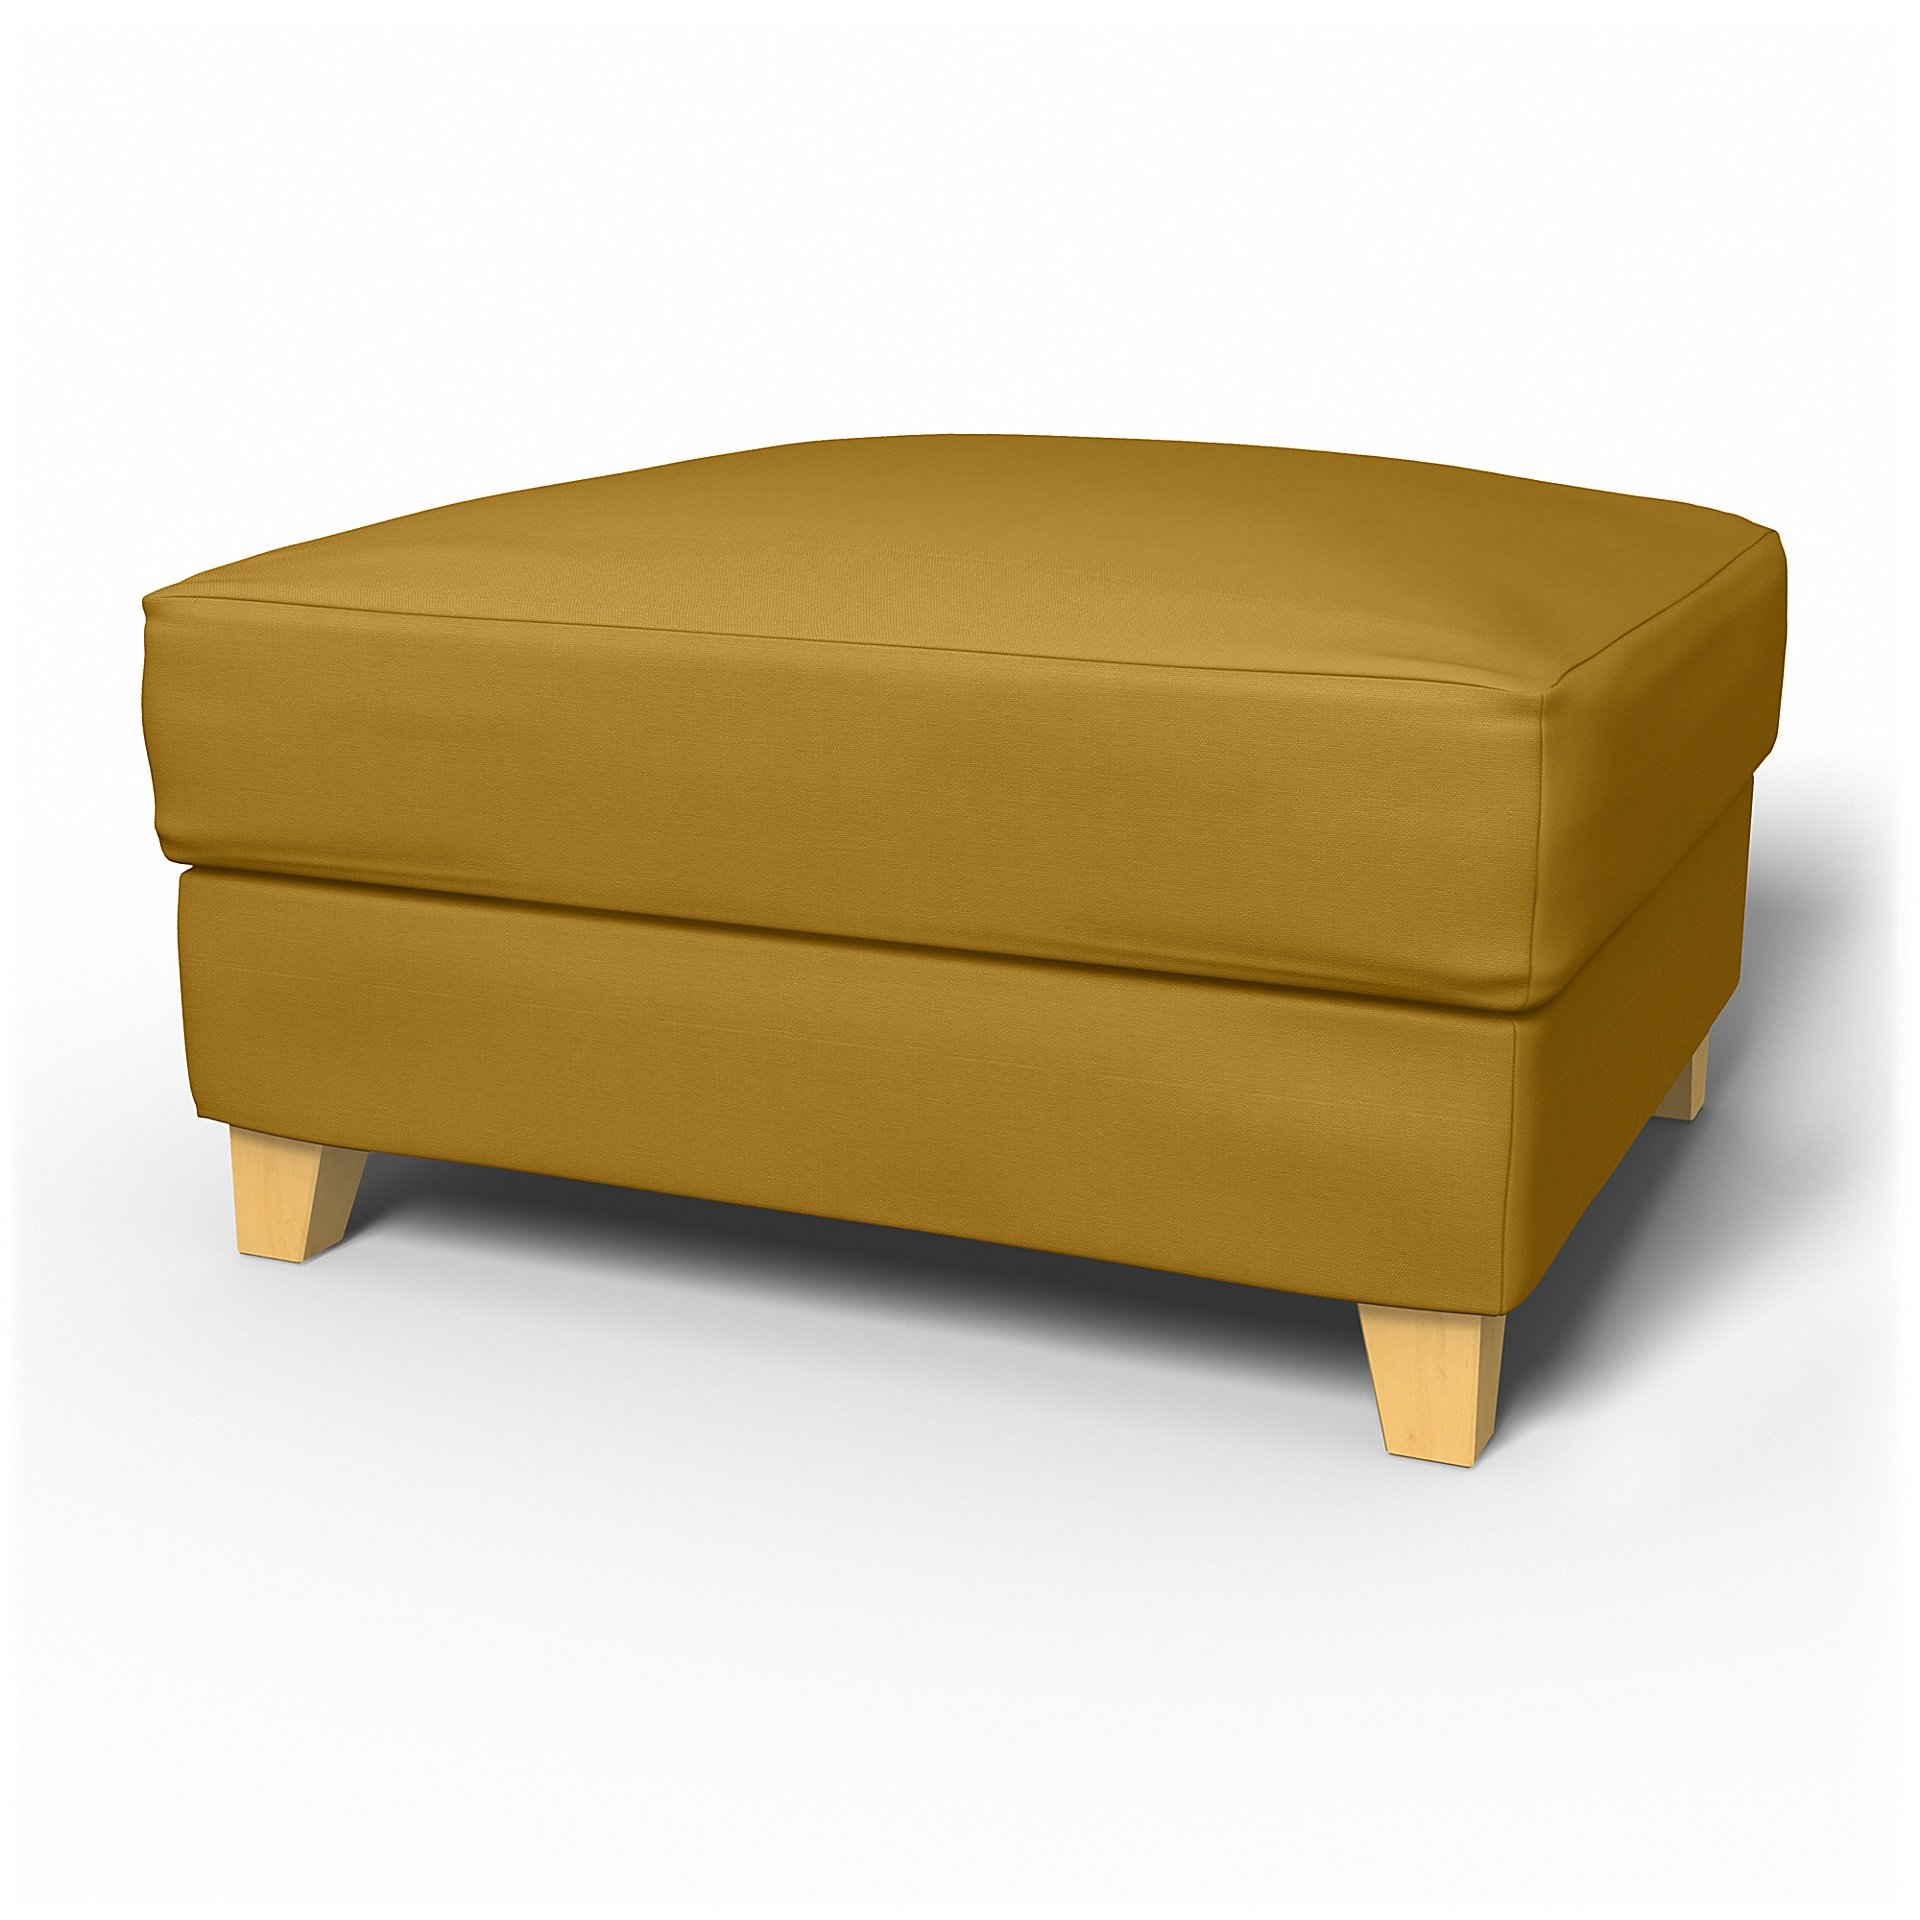 IKEA - Backa Footstool Cover, Honey Mustard, Cotton - Bemz